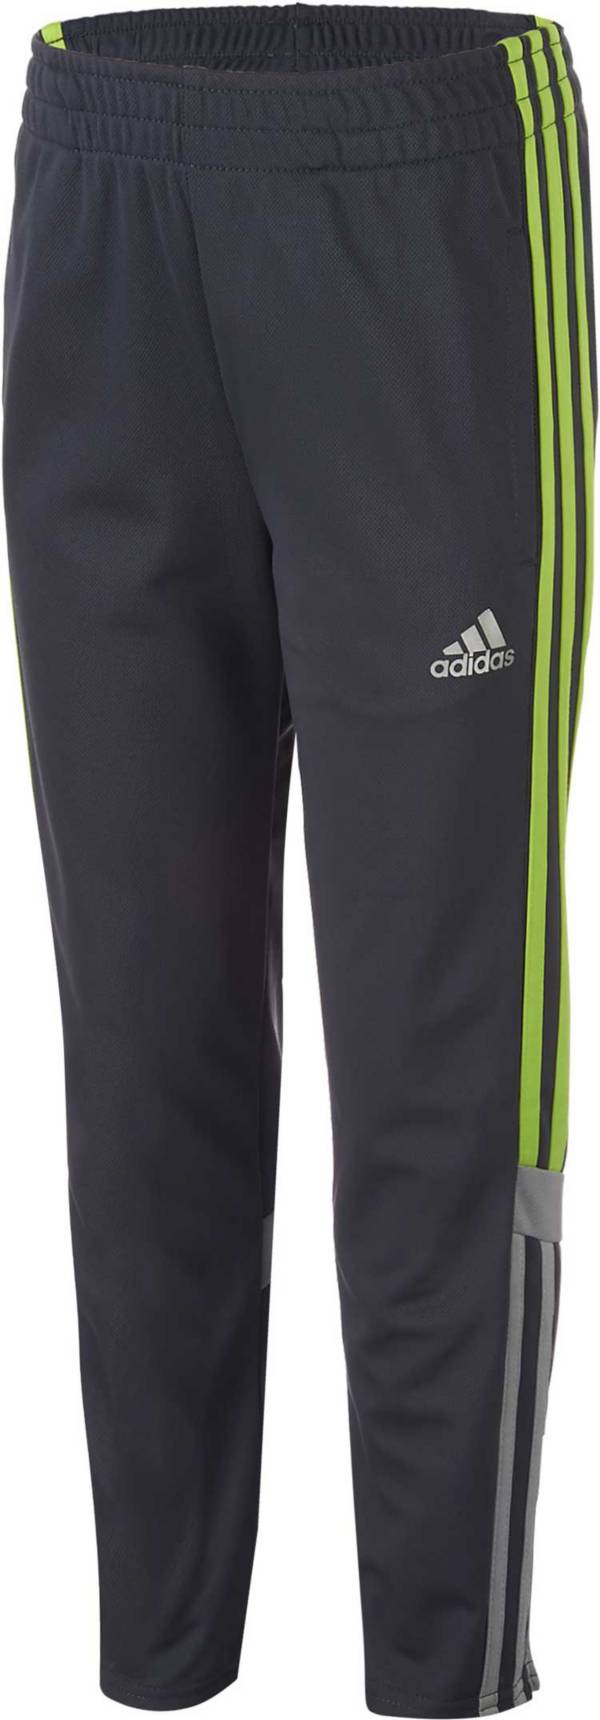 adidas Little Boys' Striker Soccer Pants product image